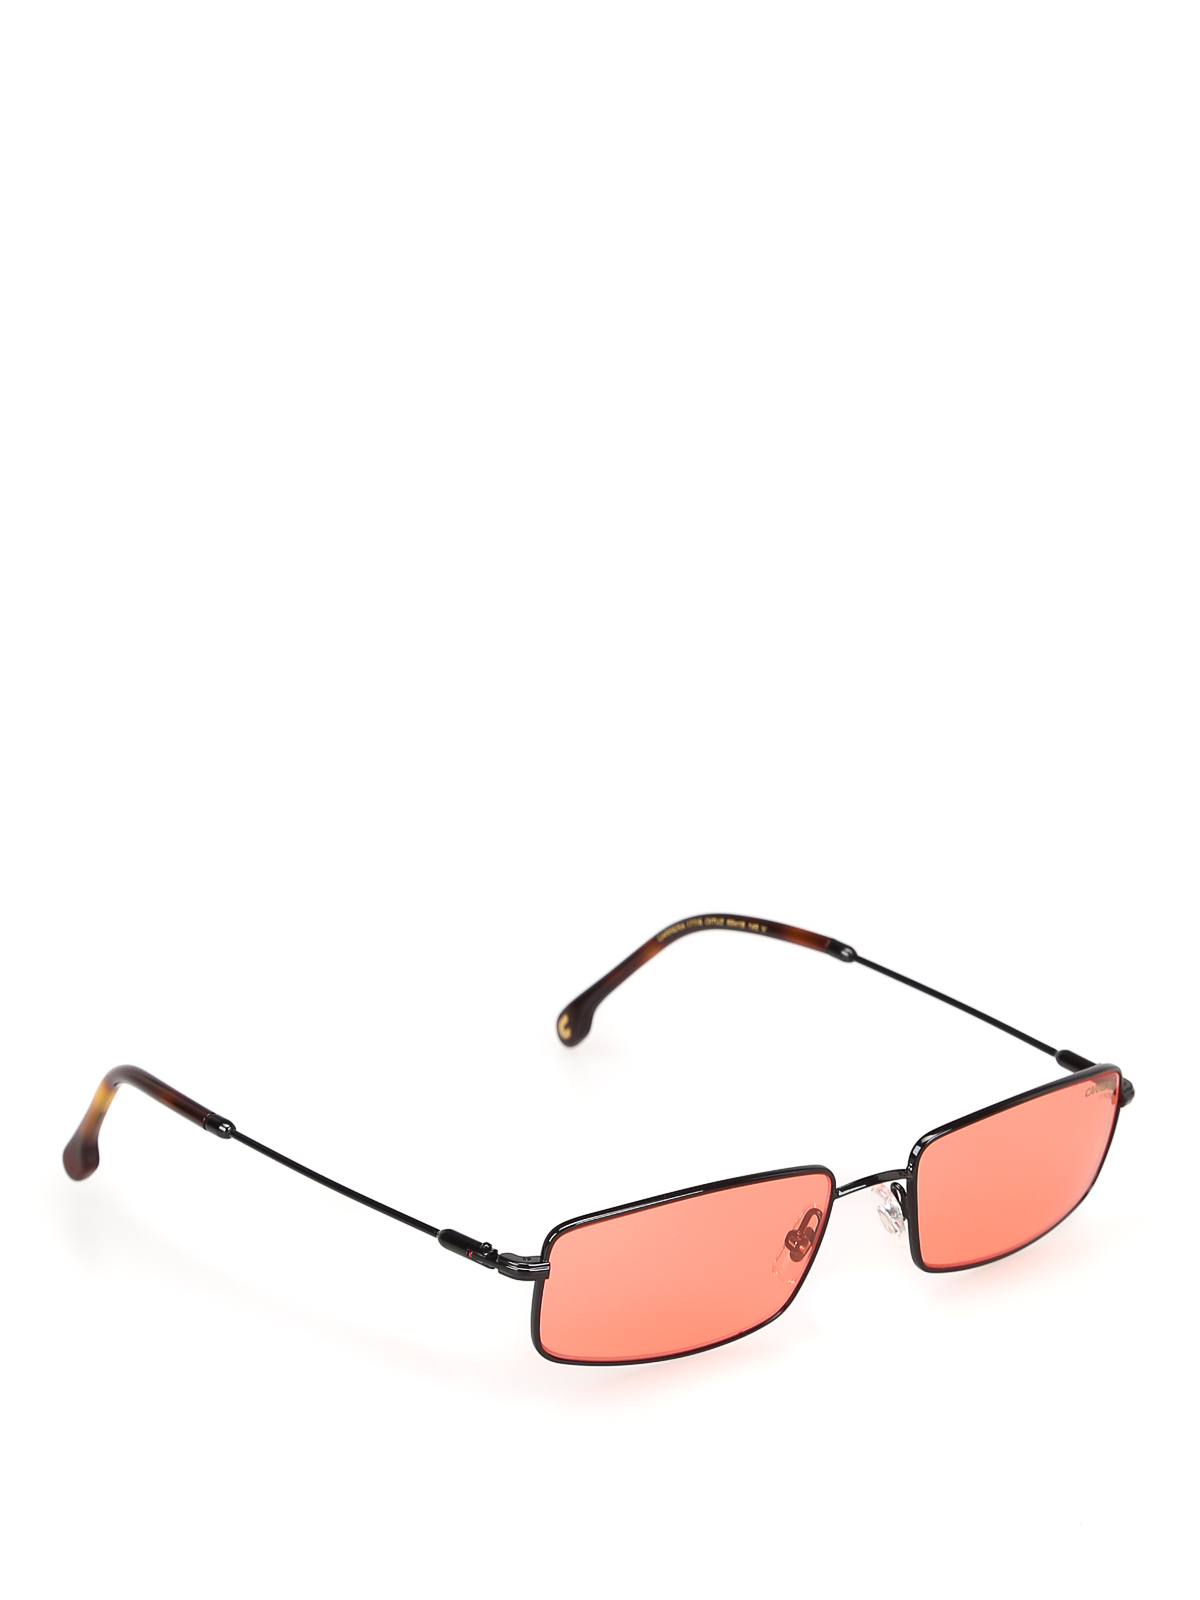 Sunglasses Carrera - Black metal rectangular sunglasses - CARRERA177SOITUZ